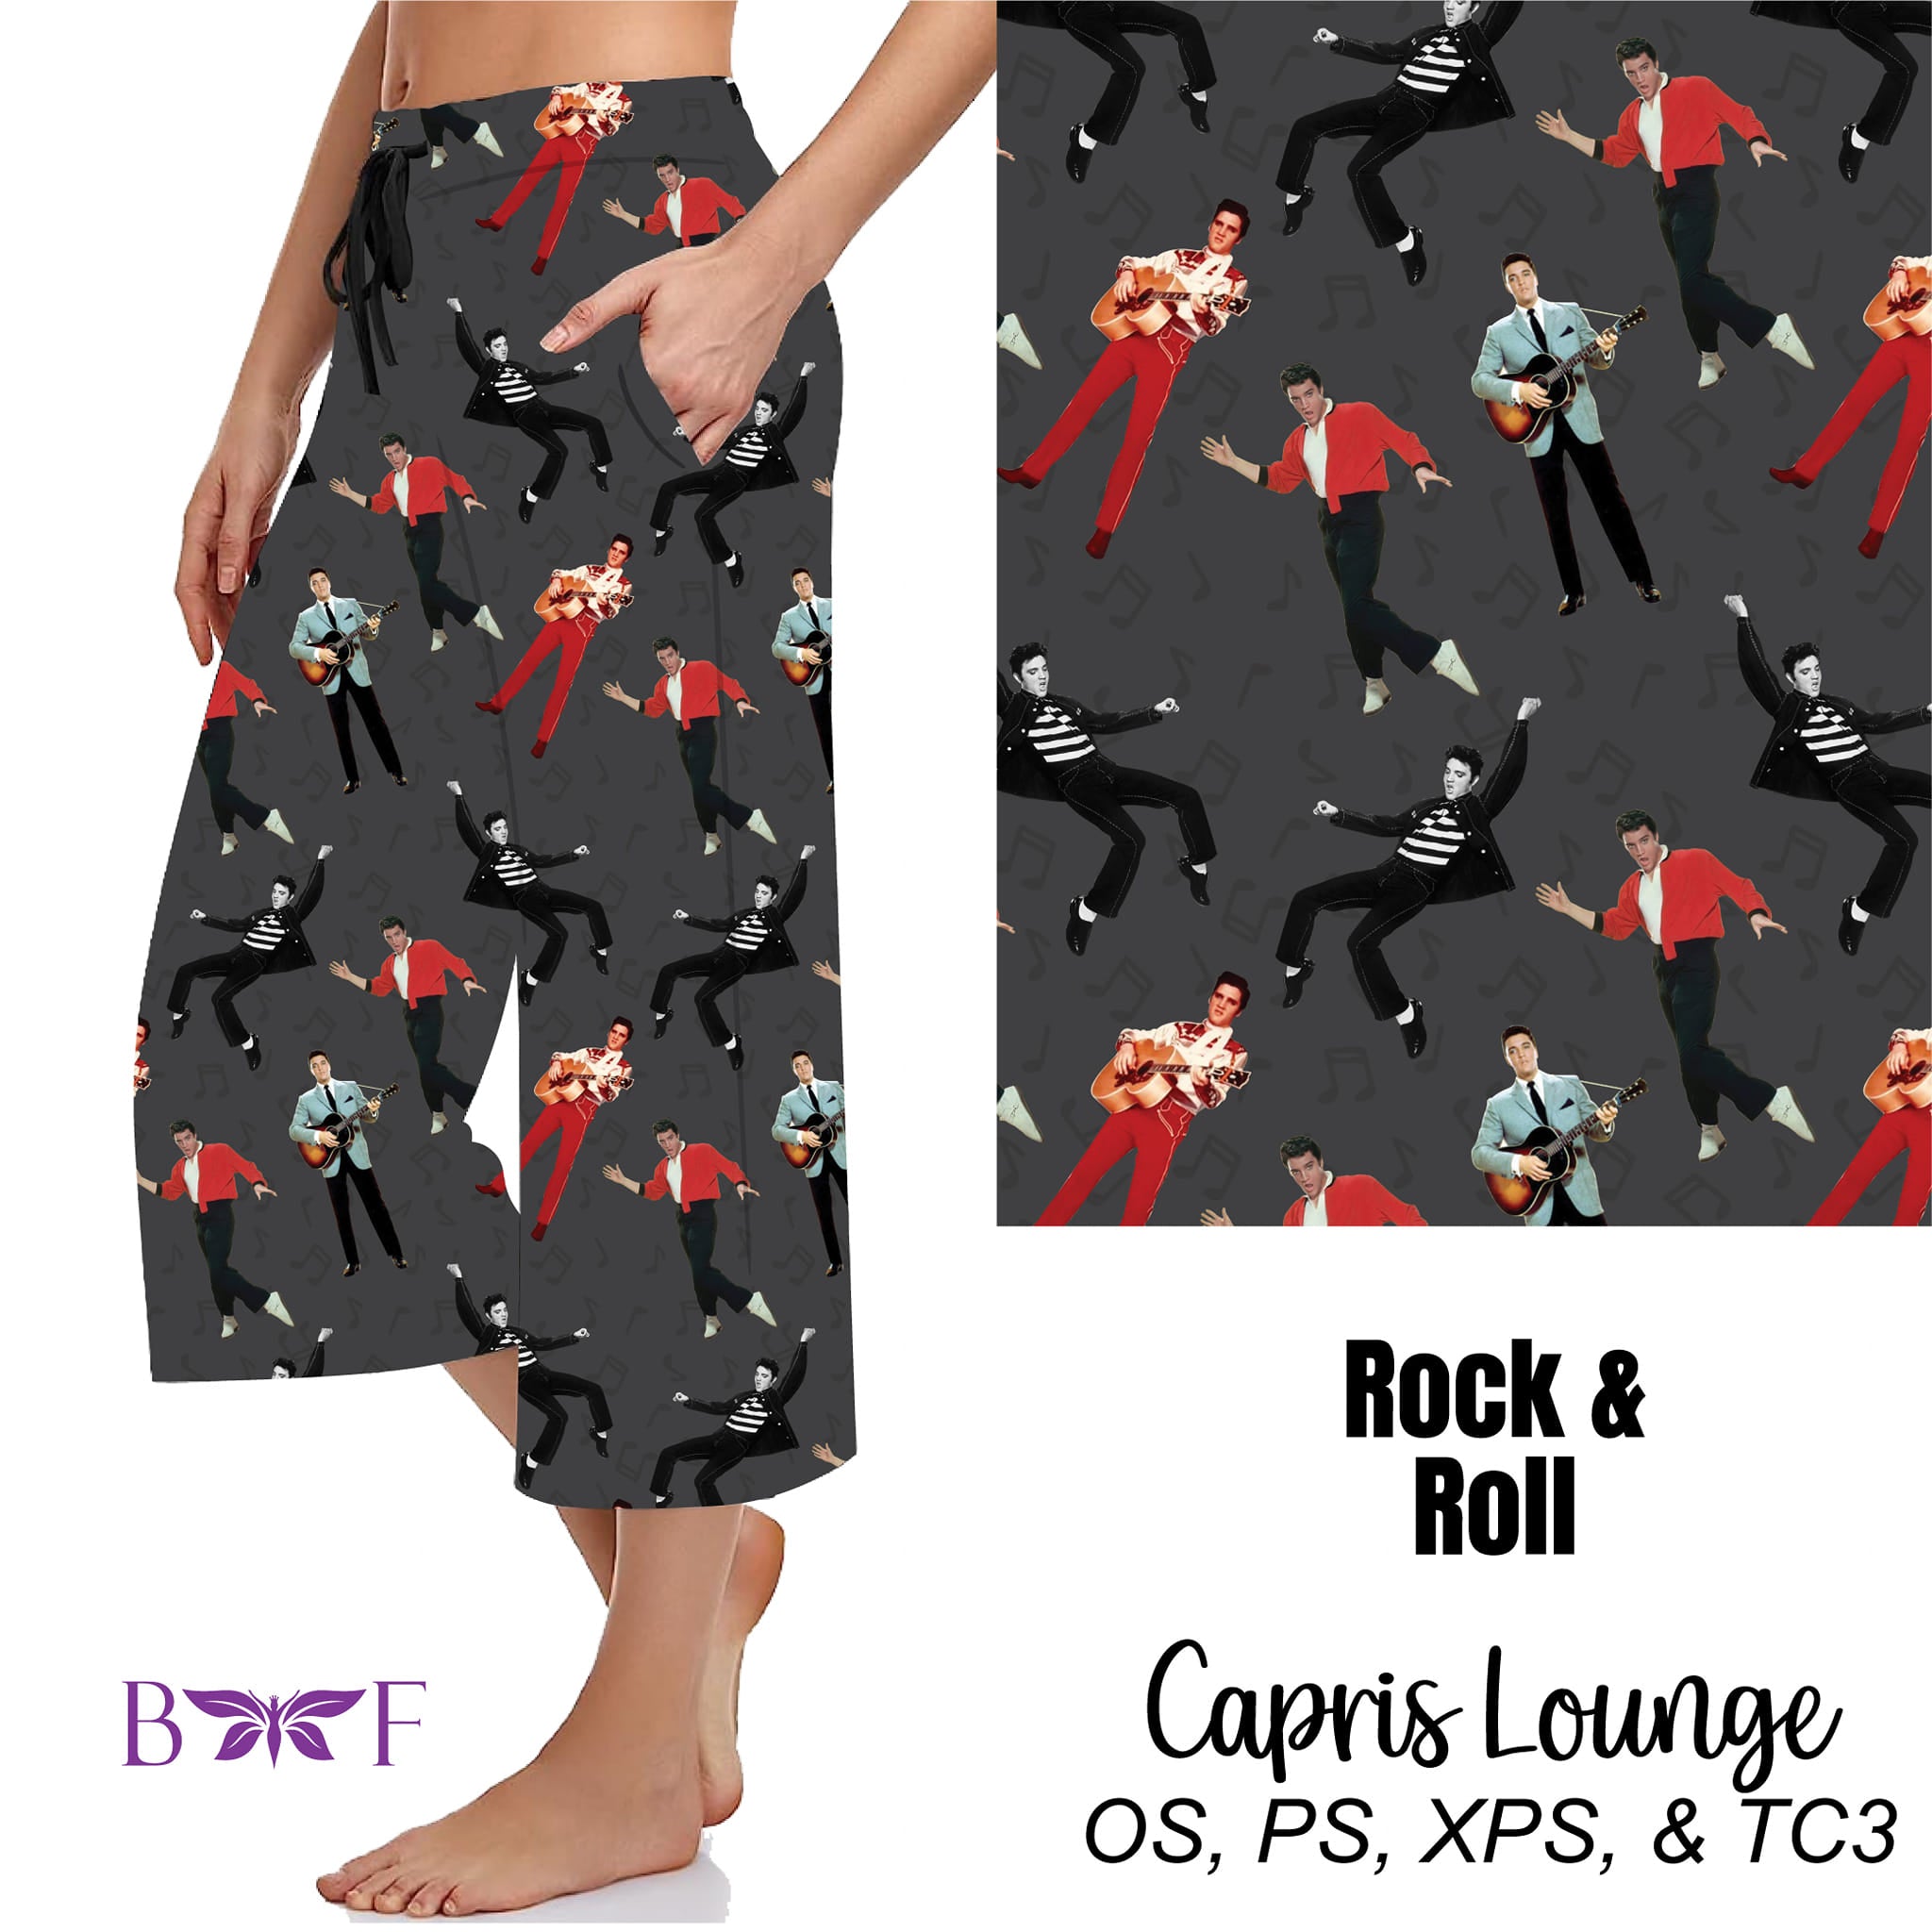 Rock & Roll Leggings with pockets, capri lounger